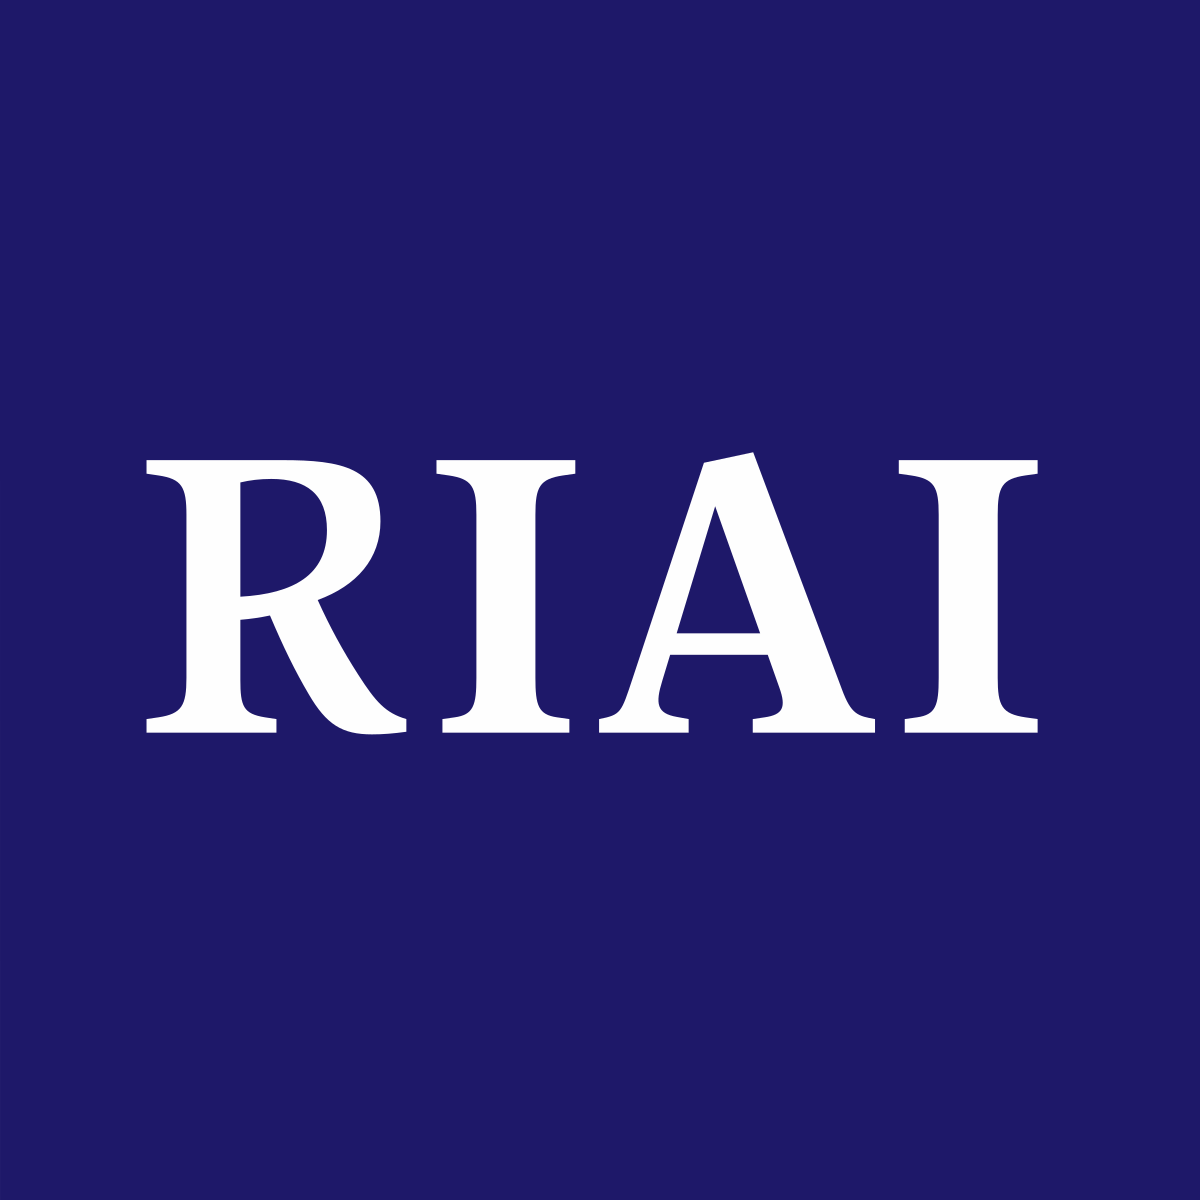 RIAI Future Award and RIAI Student Awards 2021